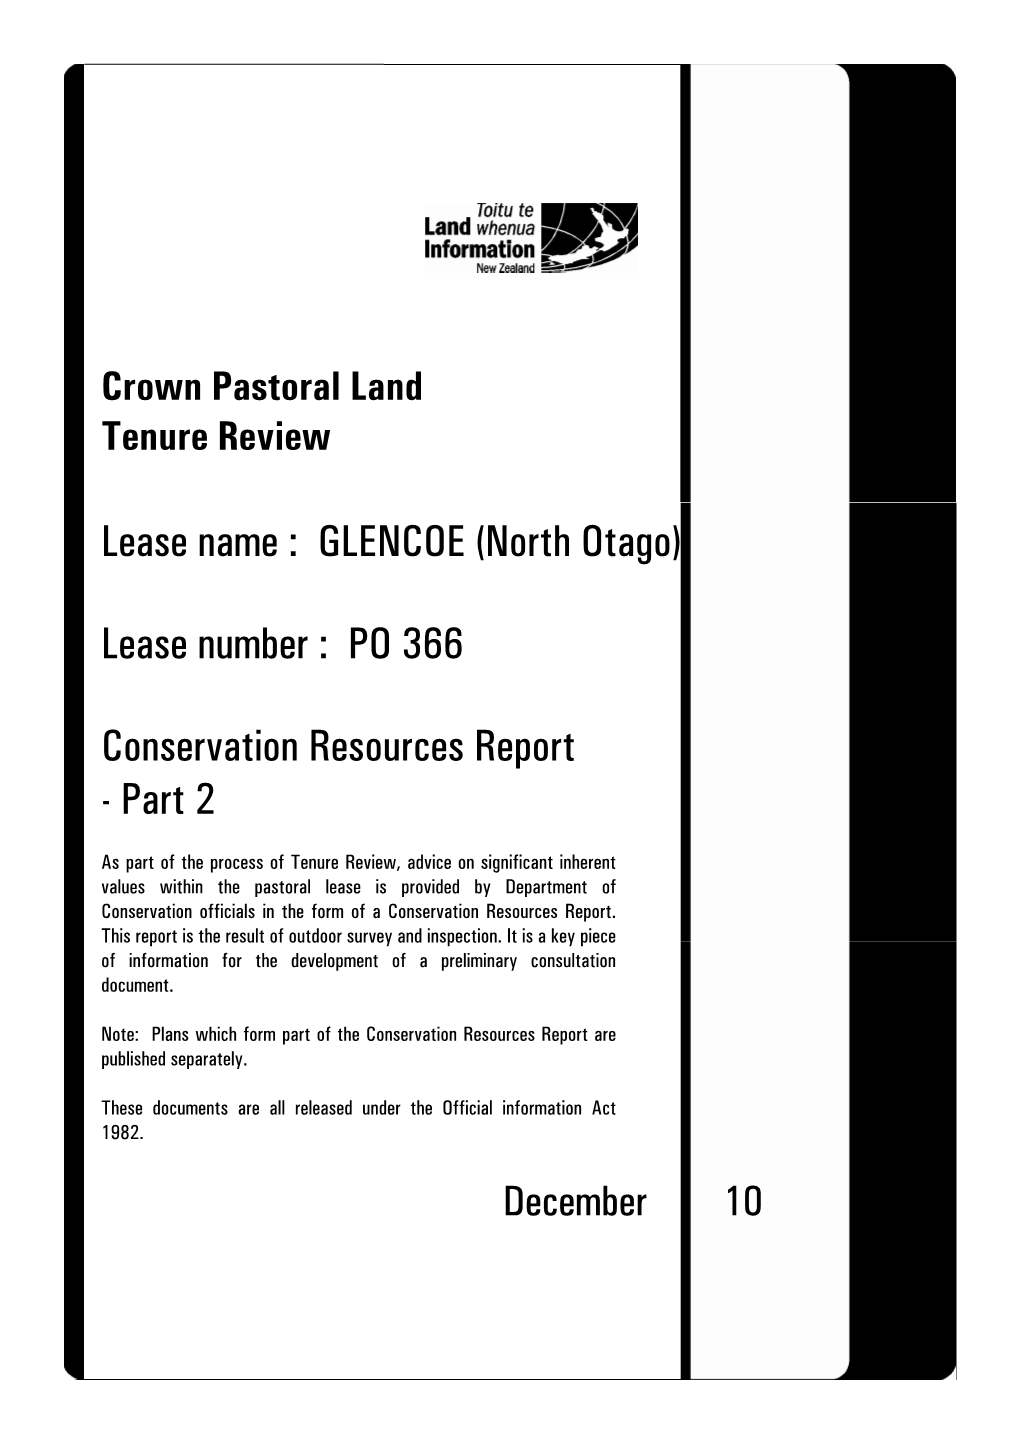 Crown Pastoral-Tenure Review-Glencoe-Conservation